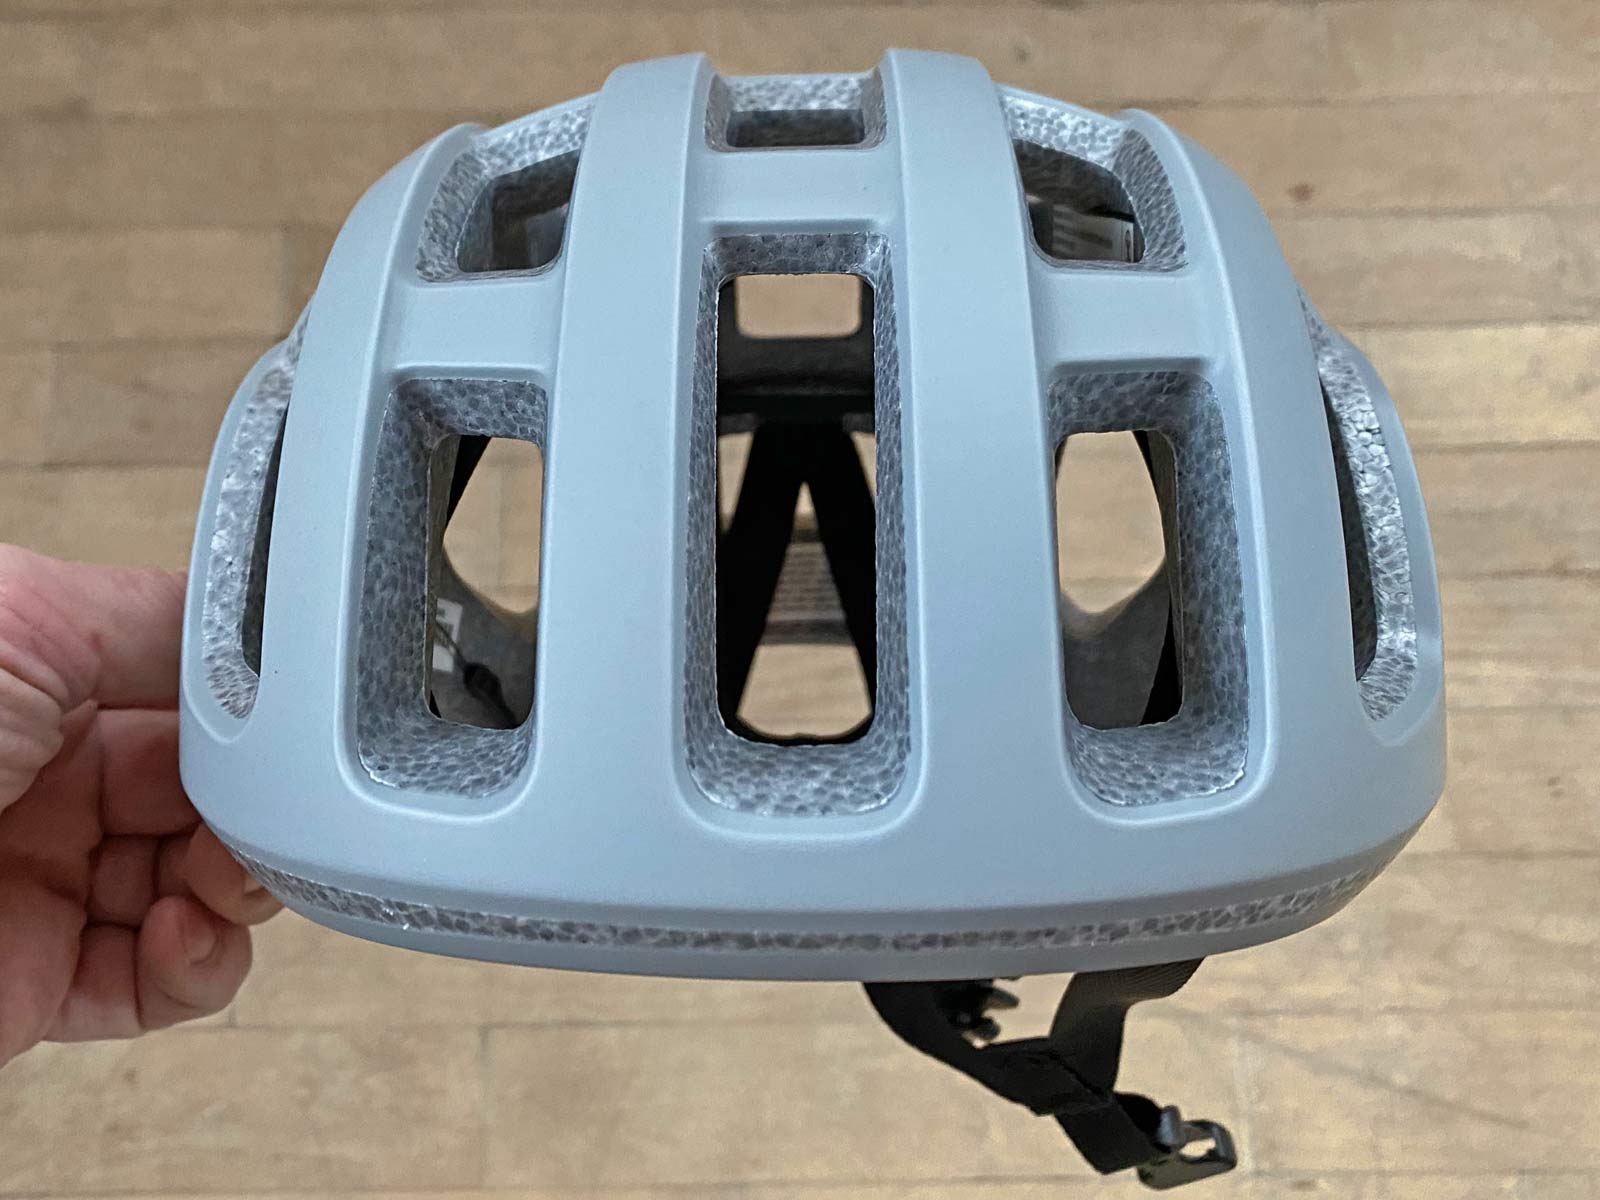 POC Ventral Lite 180g road bike helmet is their lightest-ever